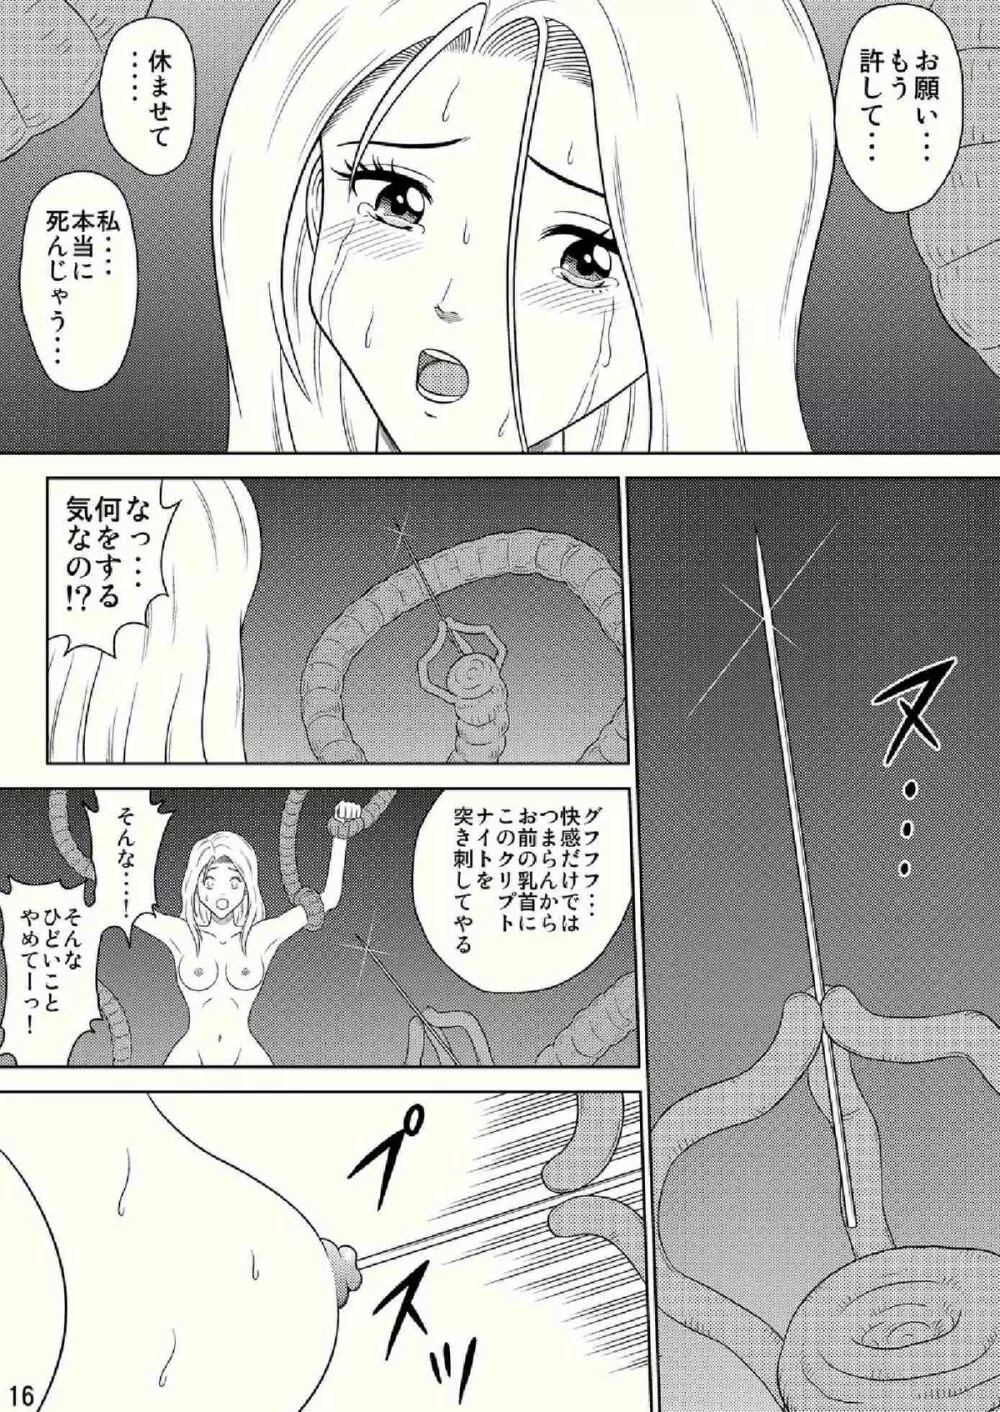 Toukikoubou vol.2 SUPER GIRL – Humiliation and Execution – 16ページ